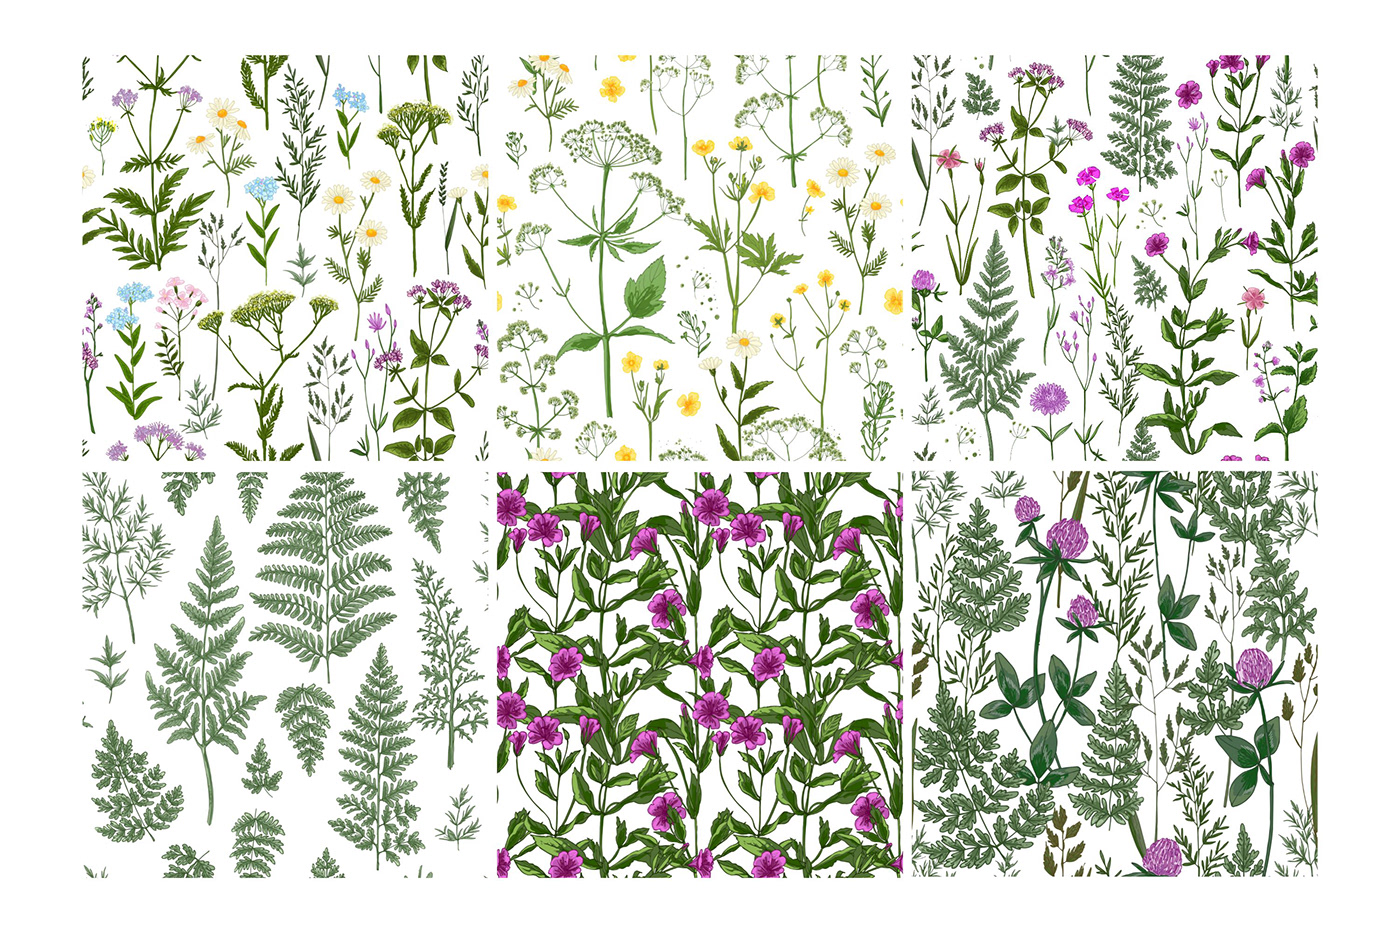 clipart Digital Art  digital illustration Drawing  Flowers Nature png sketch vector wild herbs